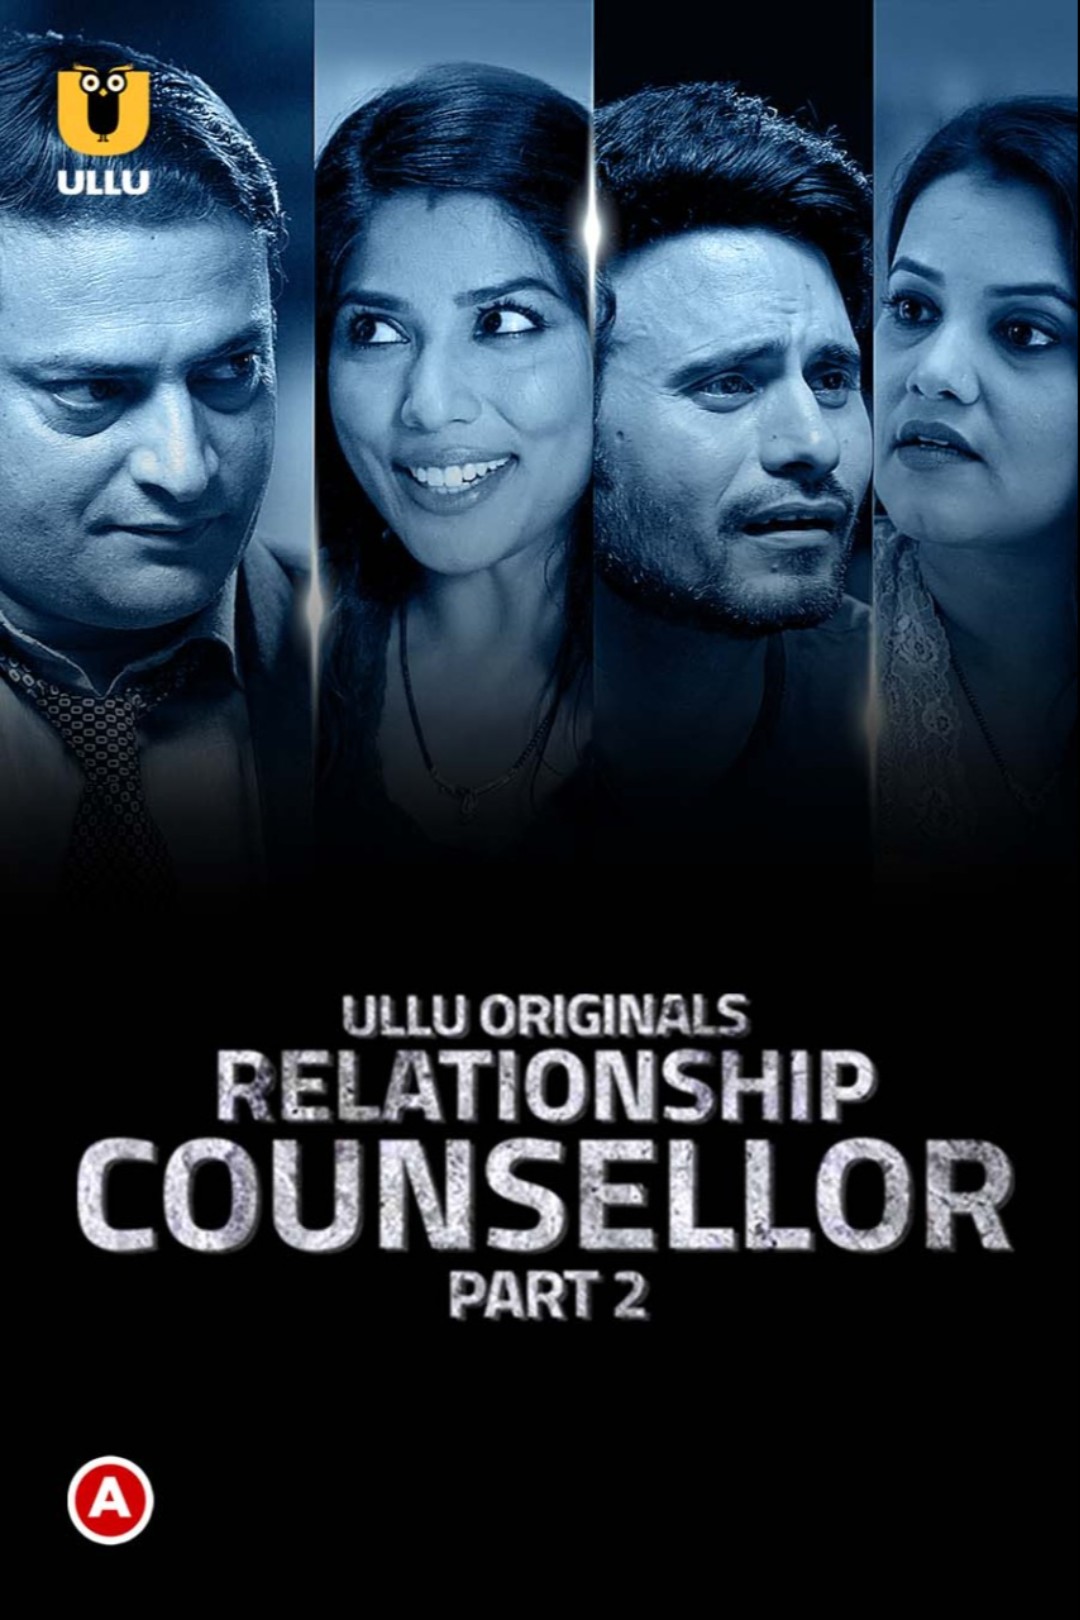 Relationship Counsellor (Part 2) 2021 S01 Hindi Ullu Originals Complete Web Series 720p HDRip 353MB Download